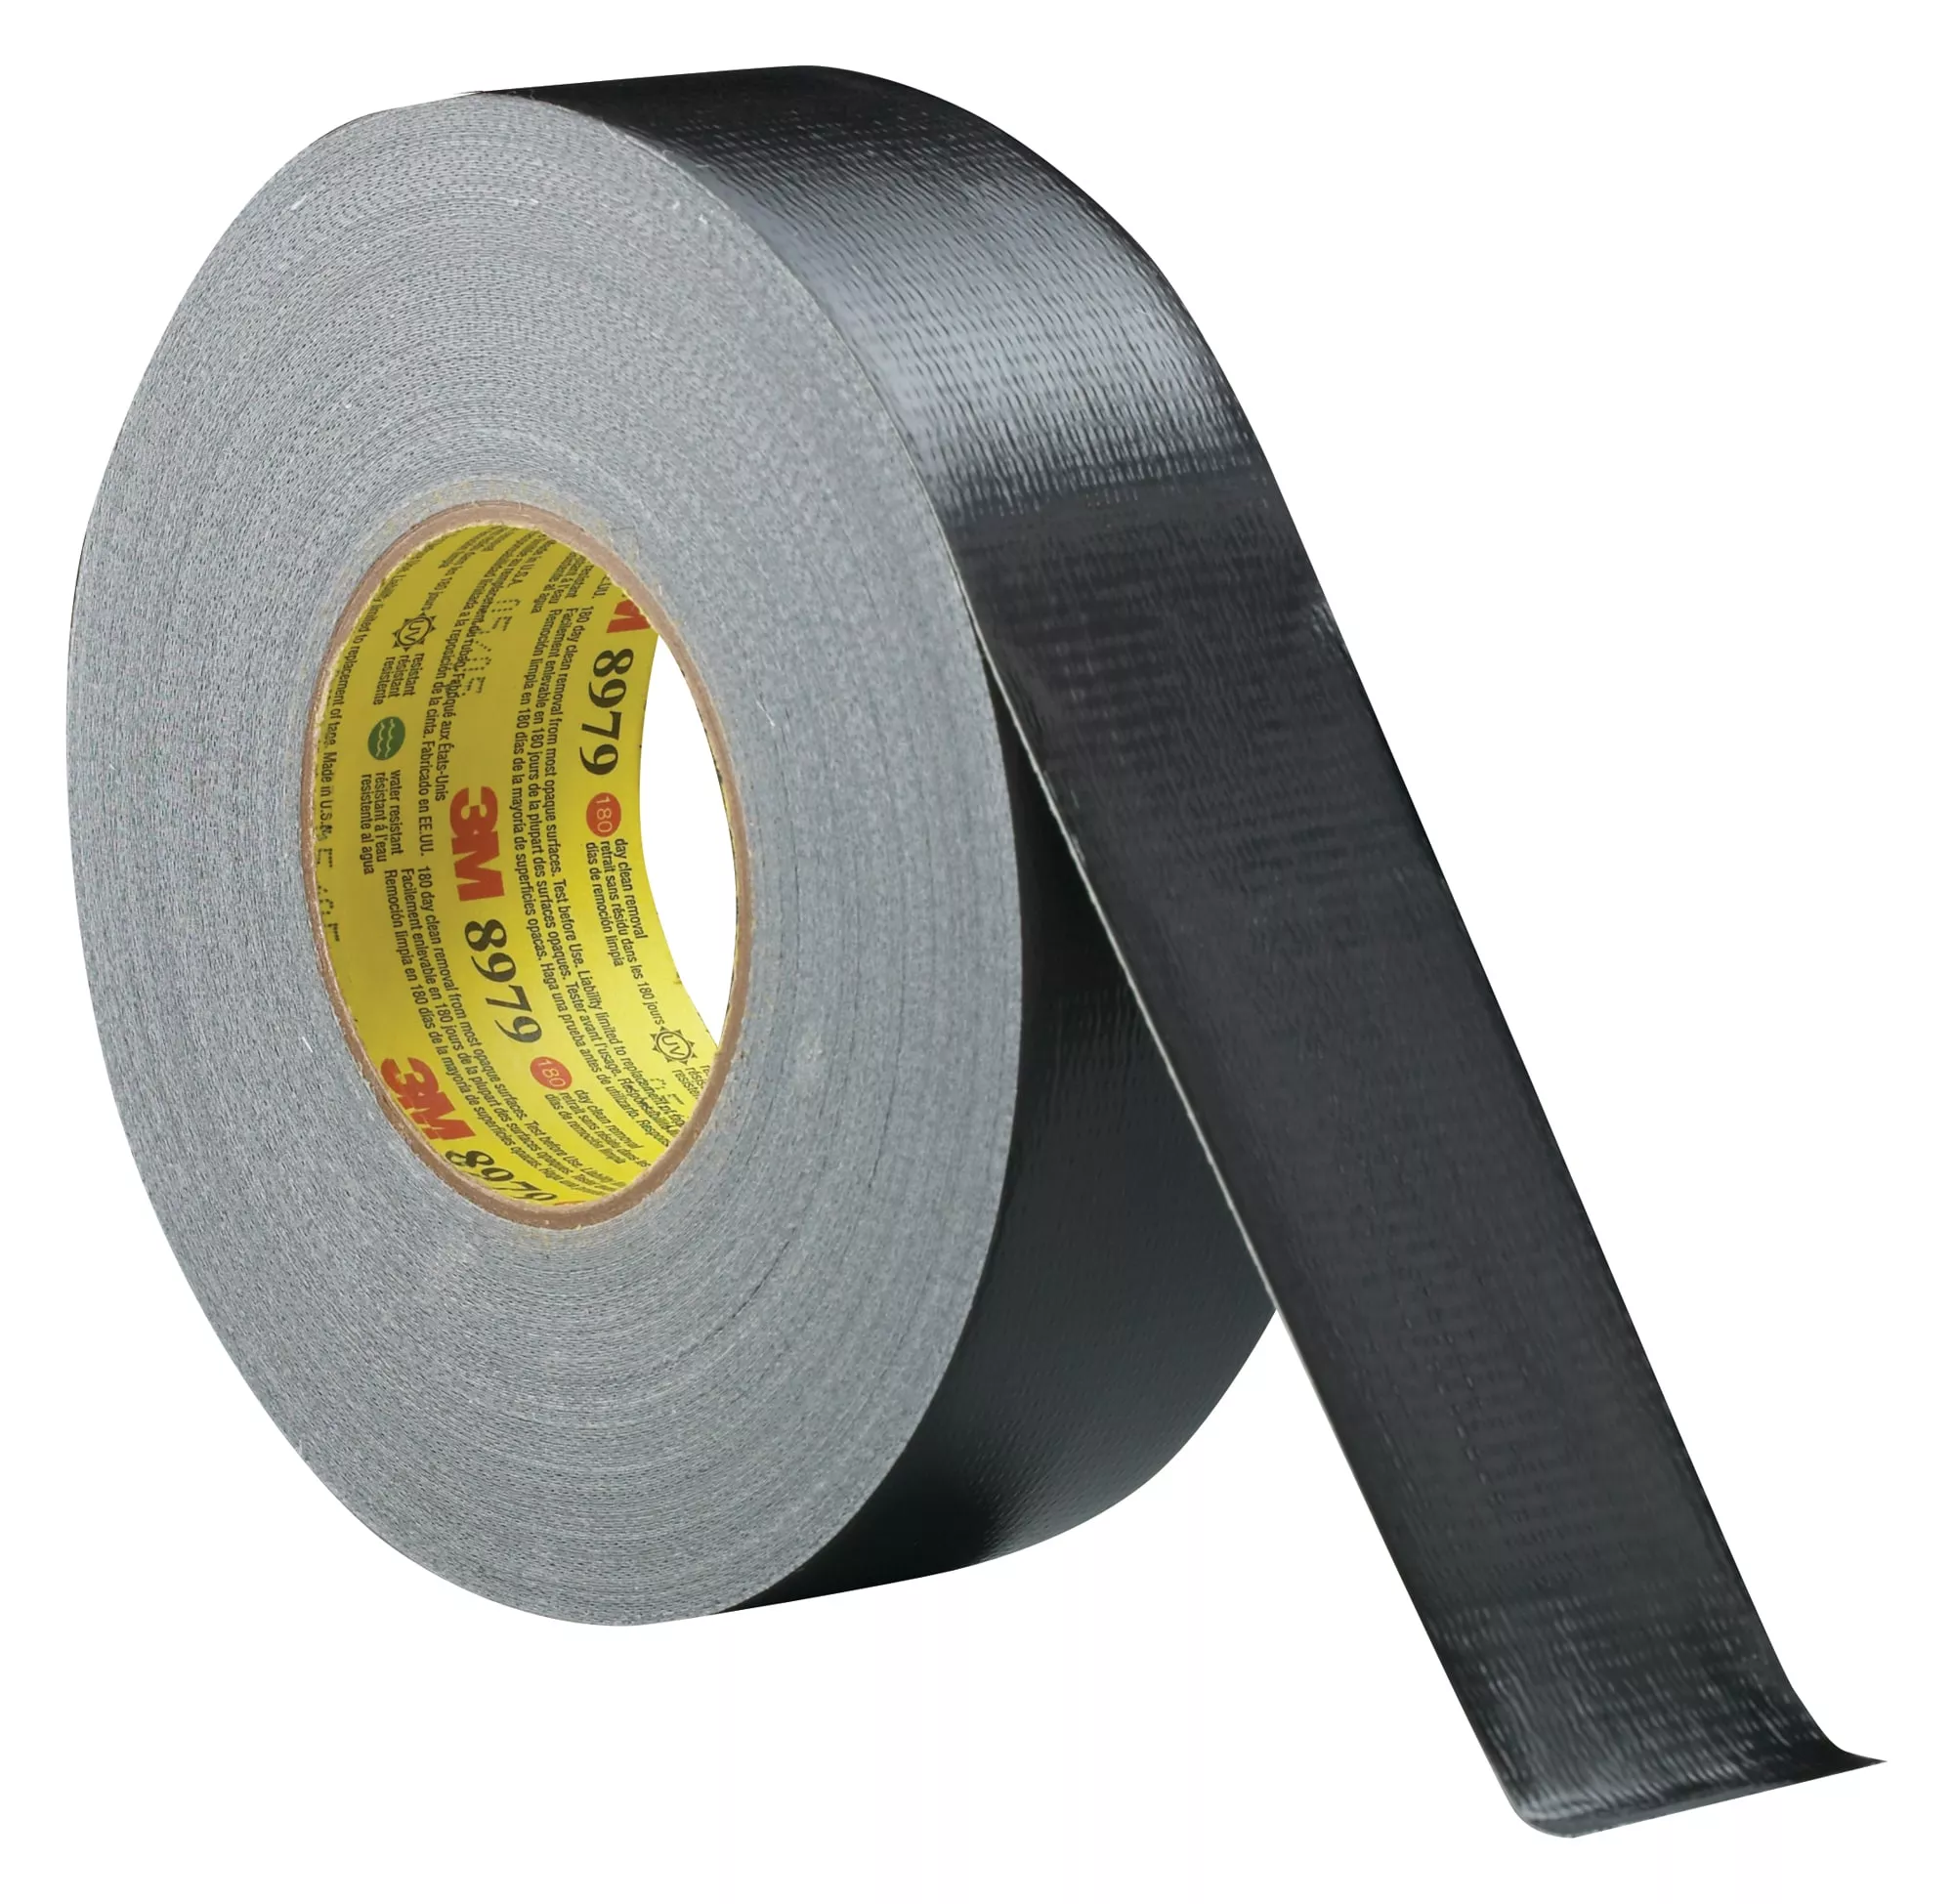 3M™ Performance Plus Duct Tape 8979, Black, 72 mm x 54.8 m, 12.1 mil, 12
Roll/Case